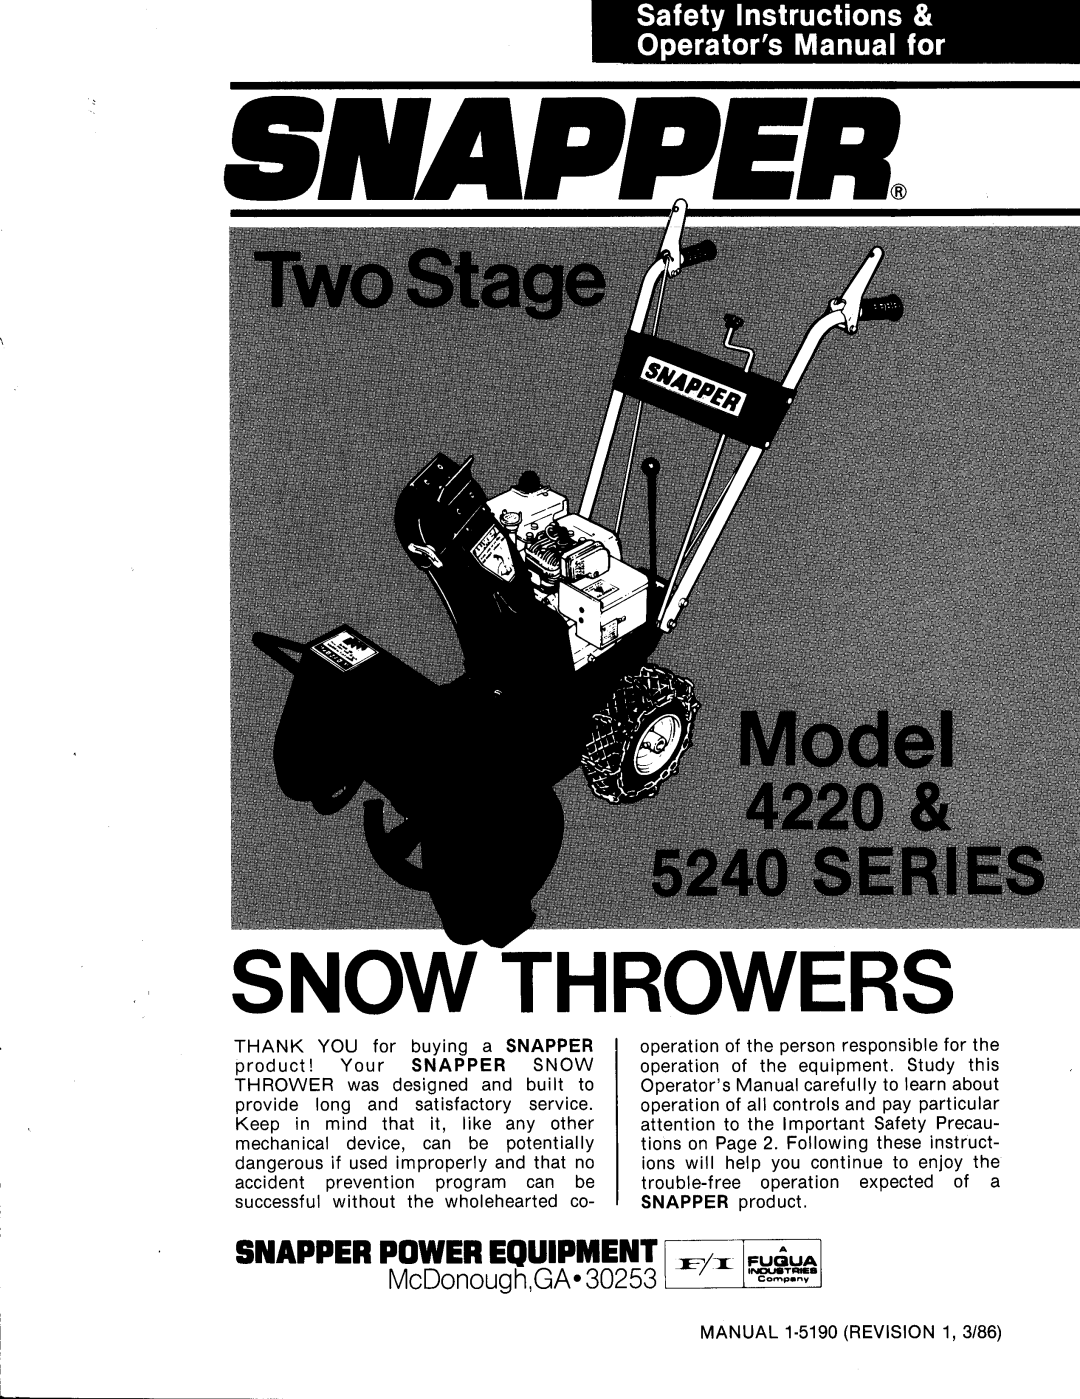 Snapper 5240 Series manual 